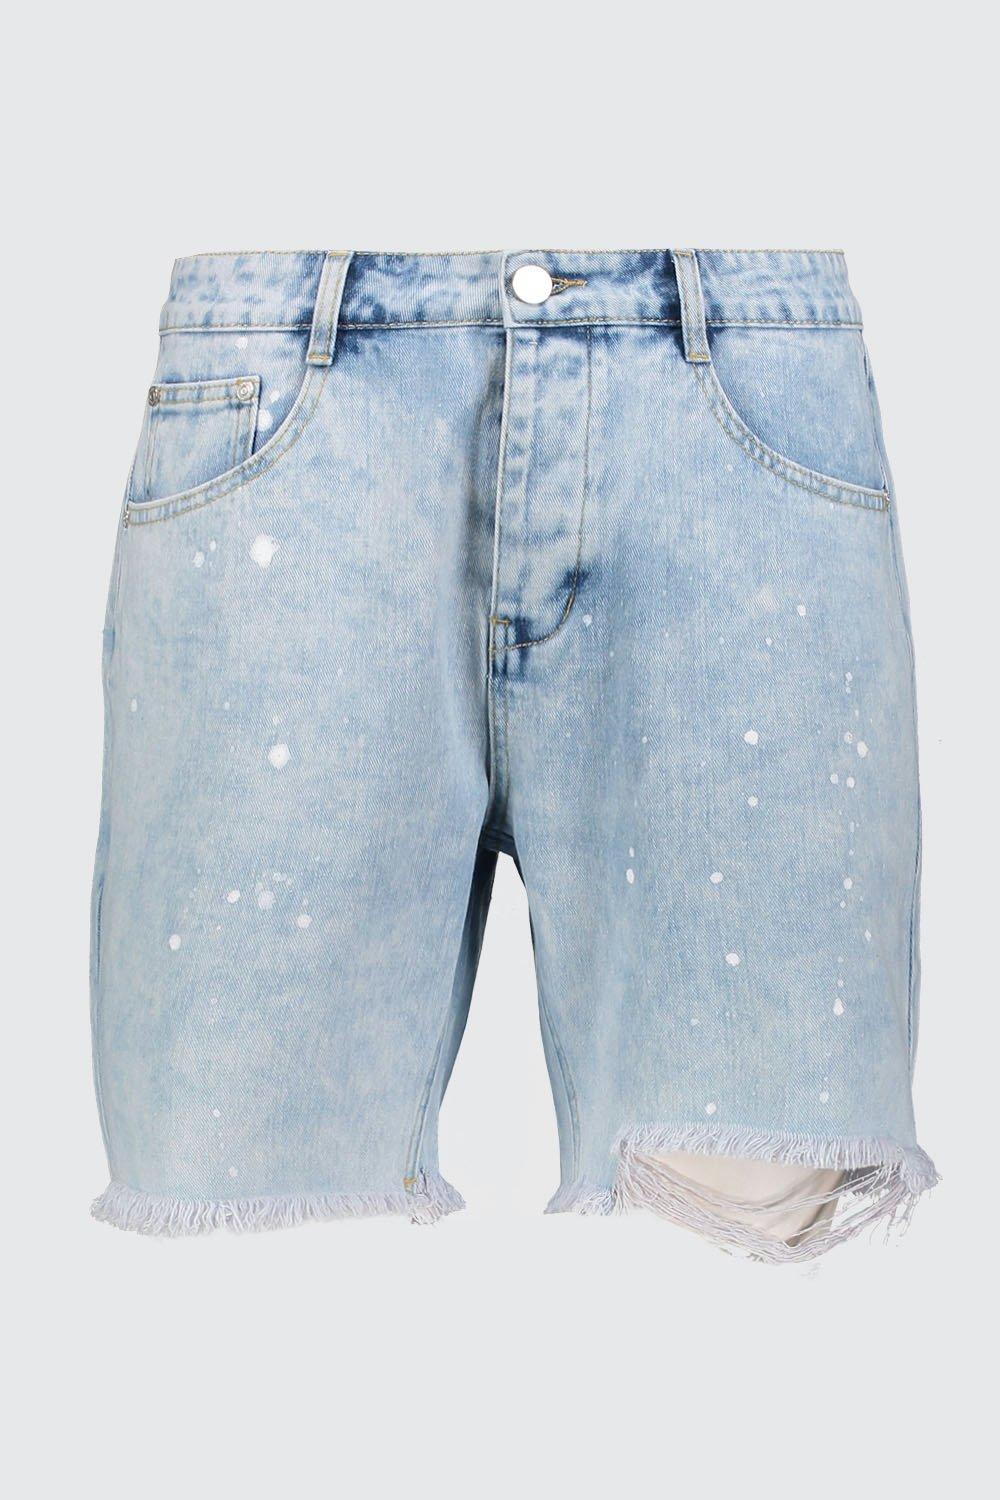 acid wash jean shorts